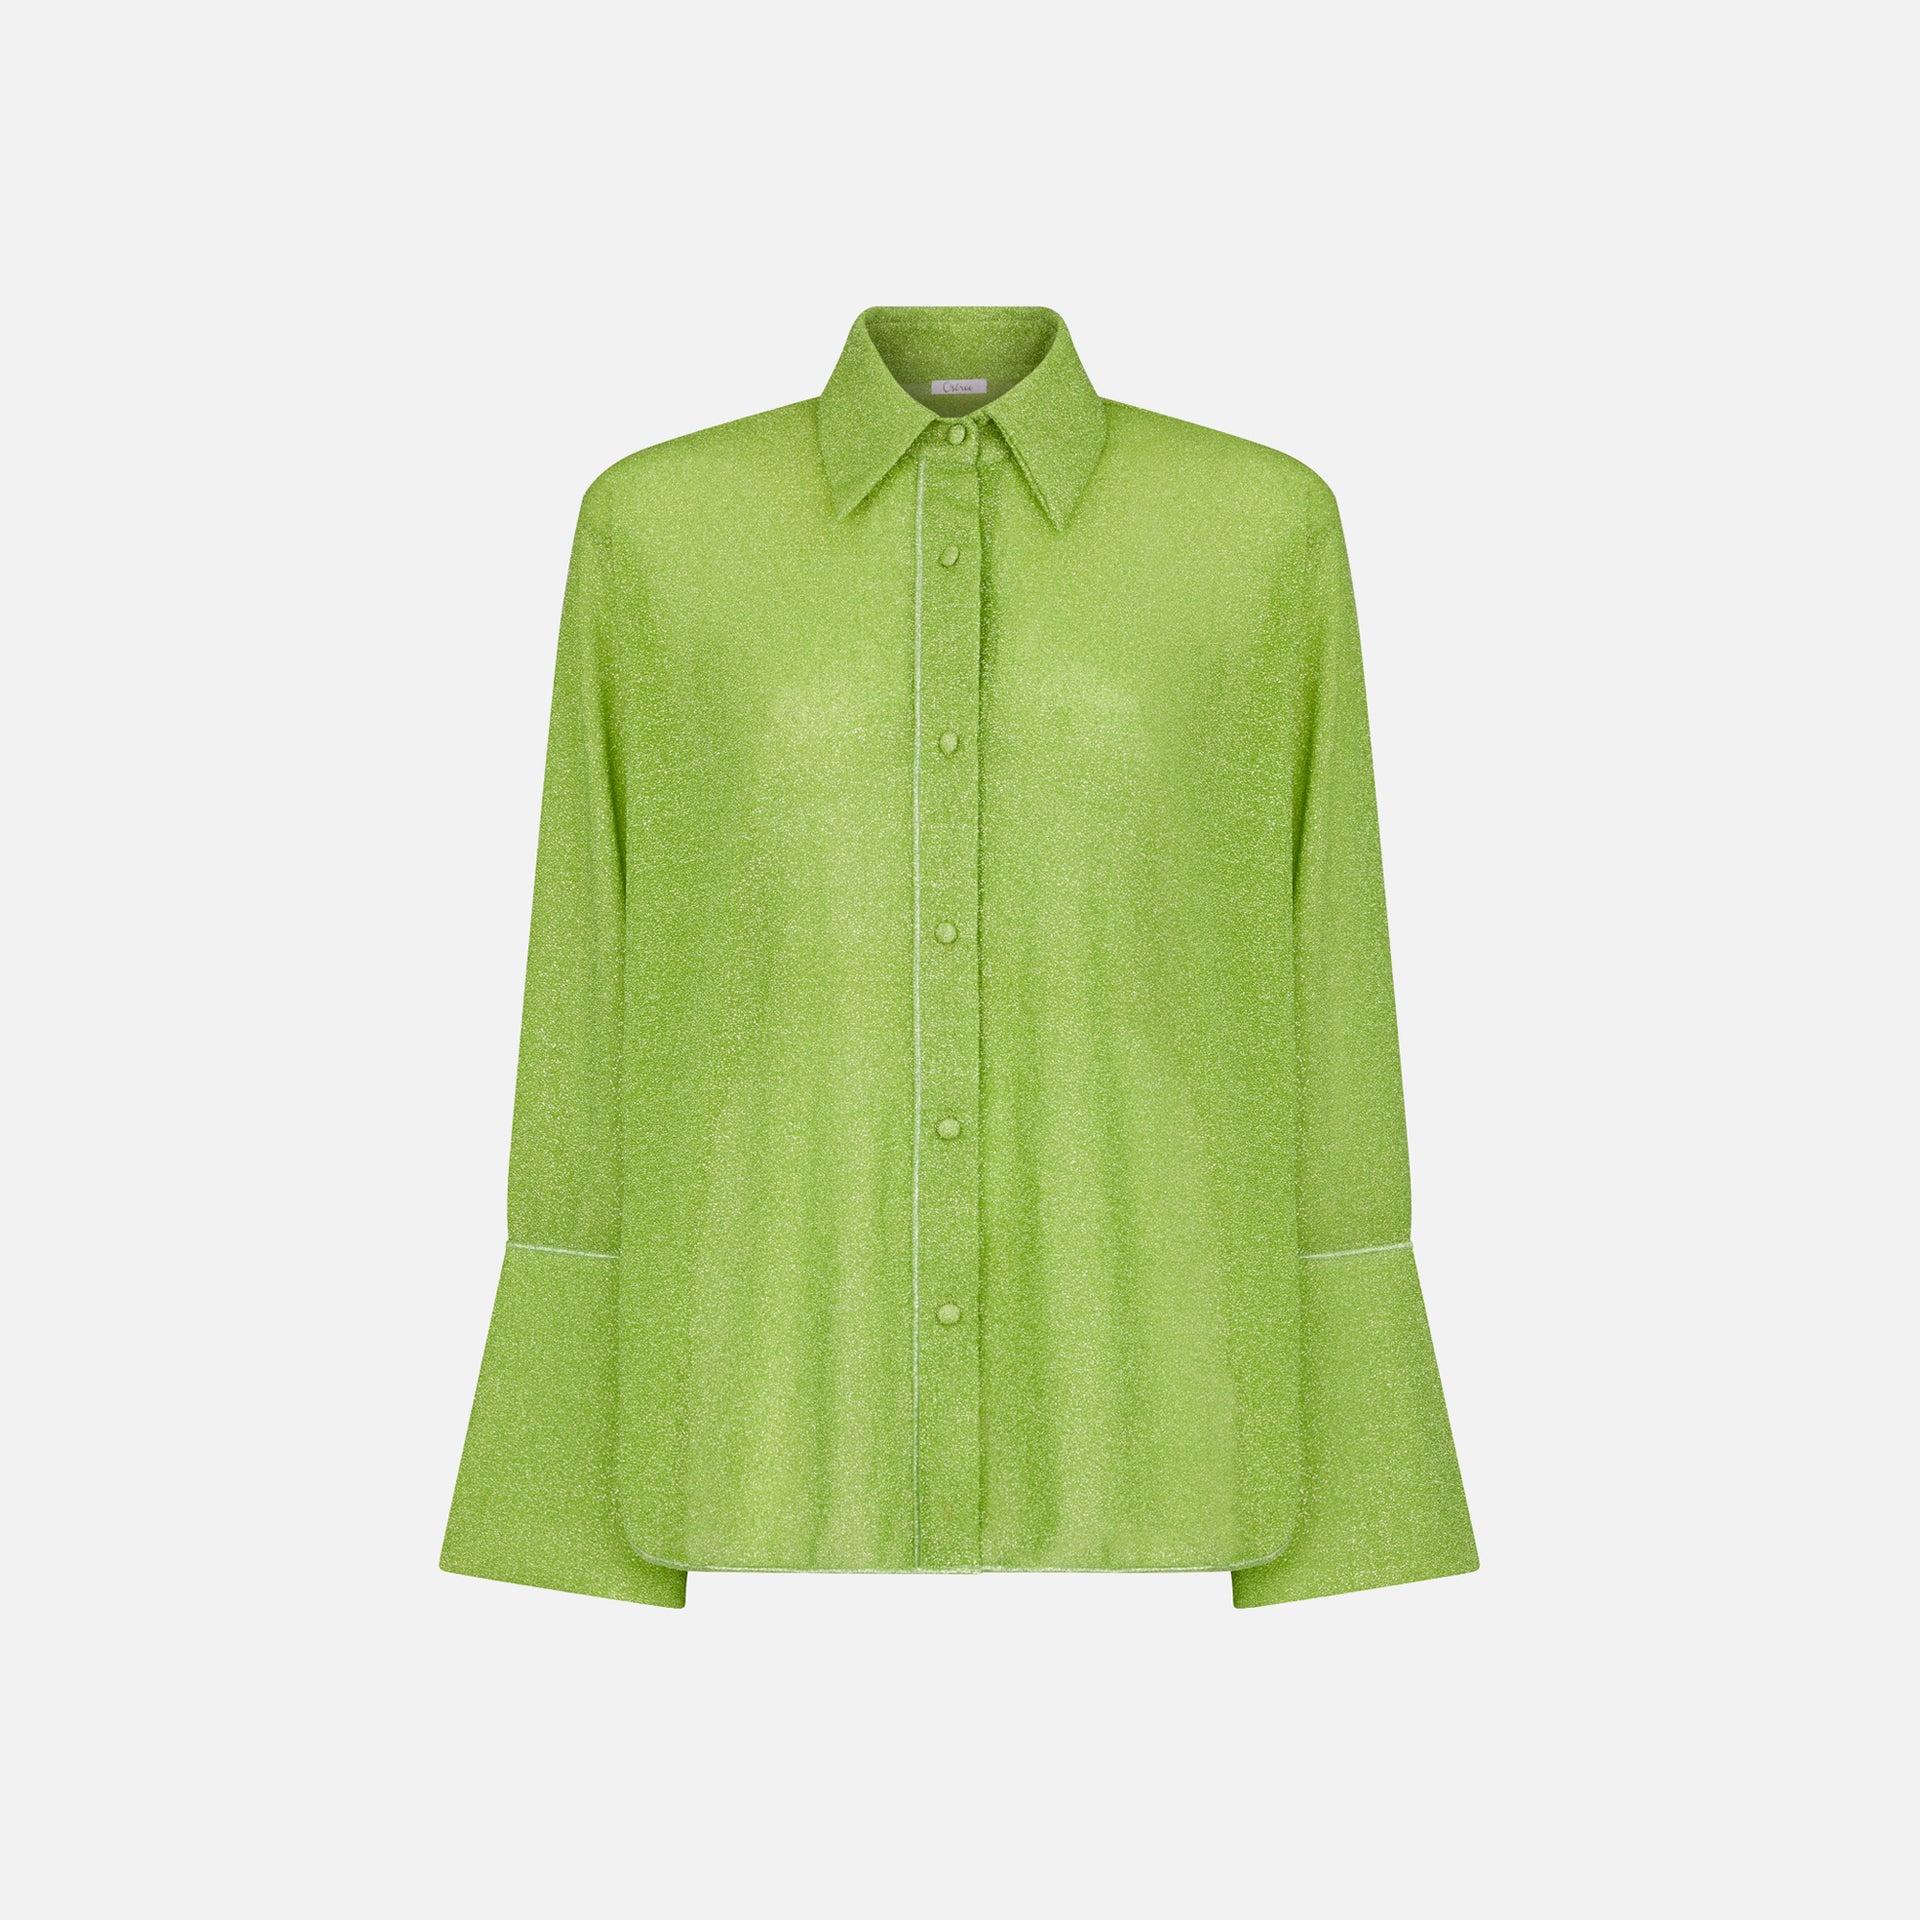 Oseree Lumiere Lurex Long Shirt - Lime